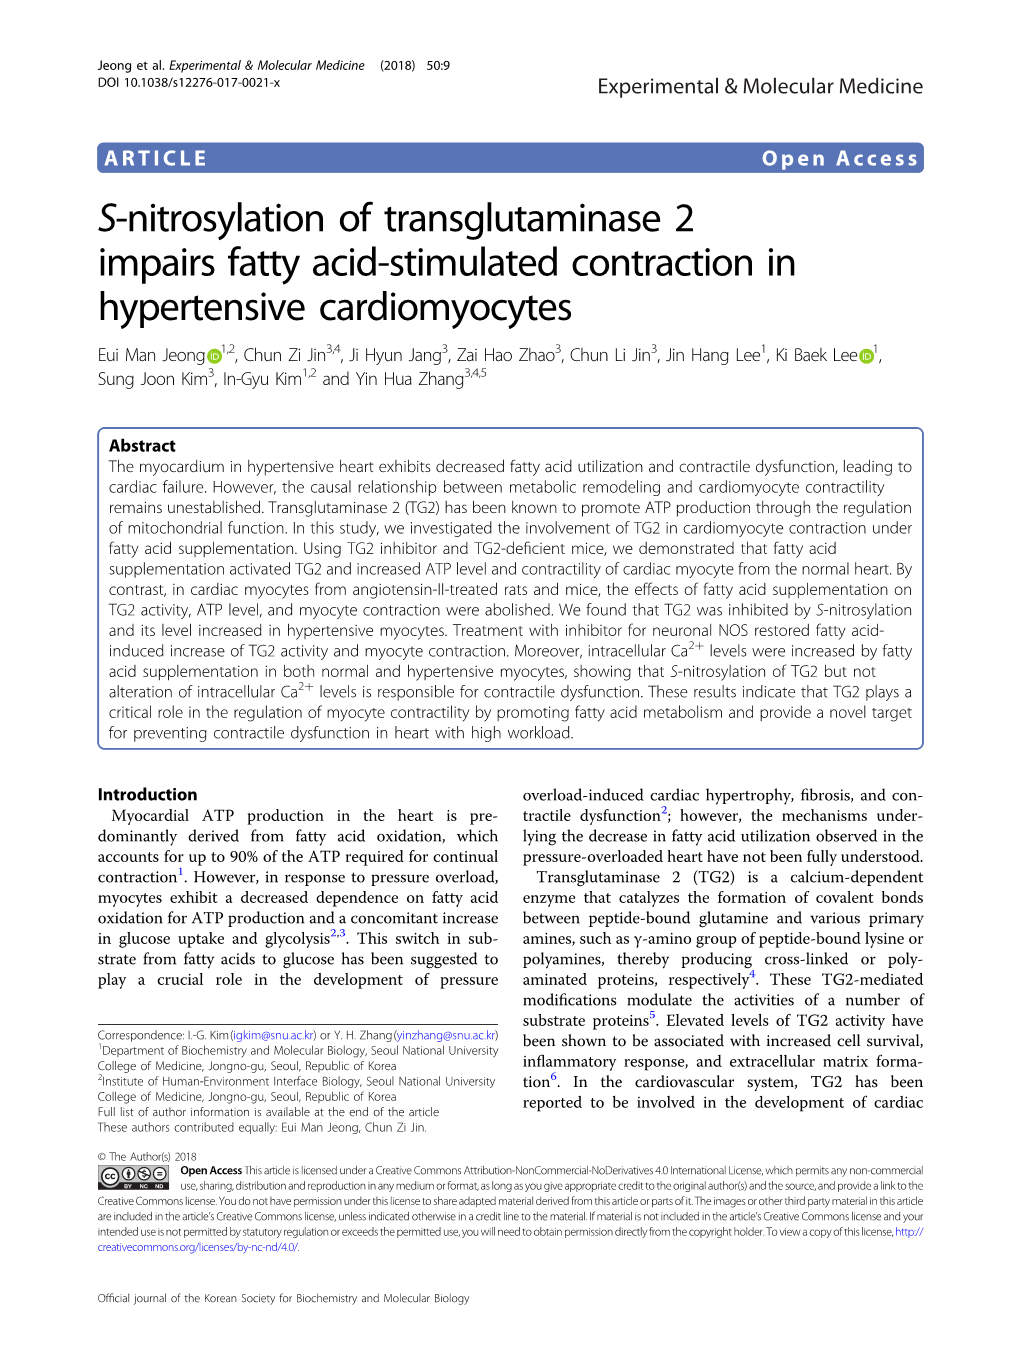 S-Nitrosylation of Transglutaminase 2 Impairs Fatty Acid-Stimulated